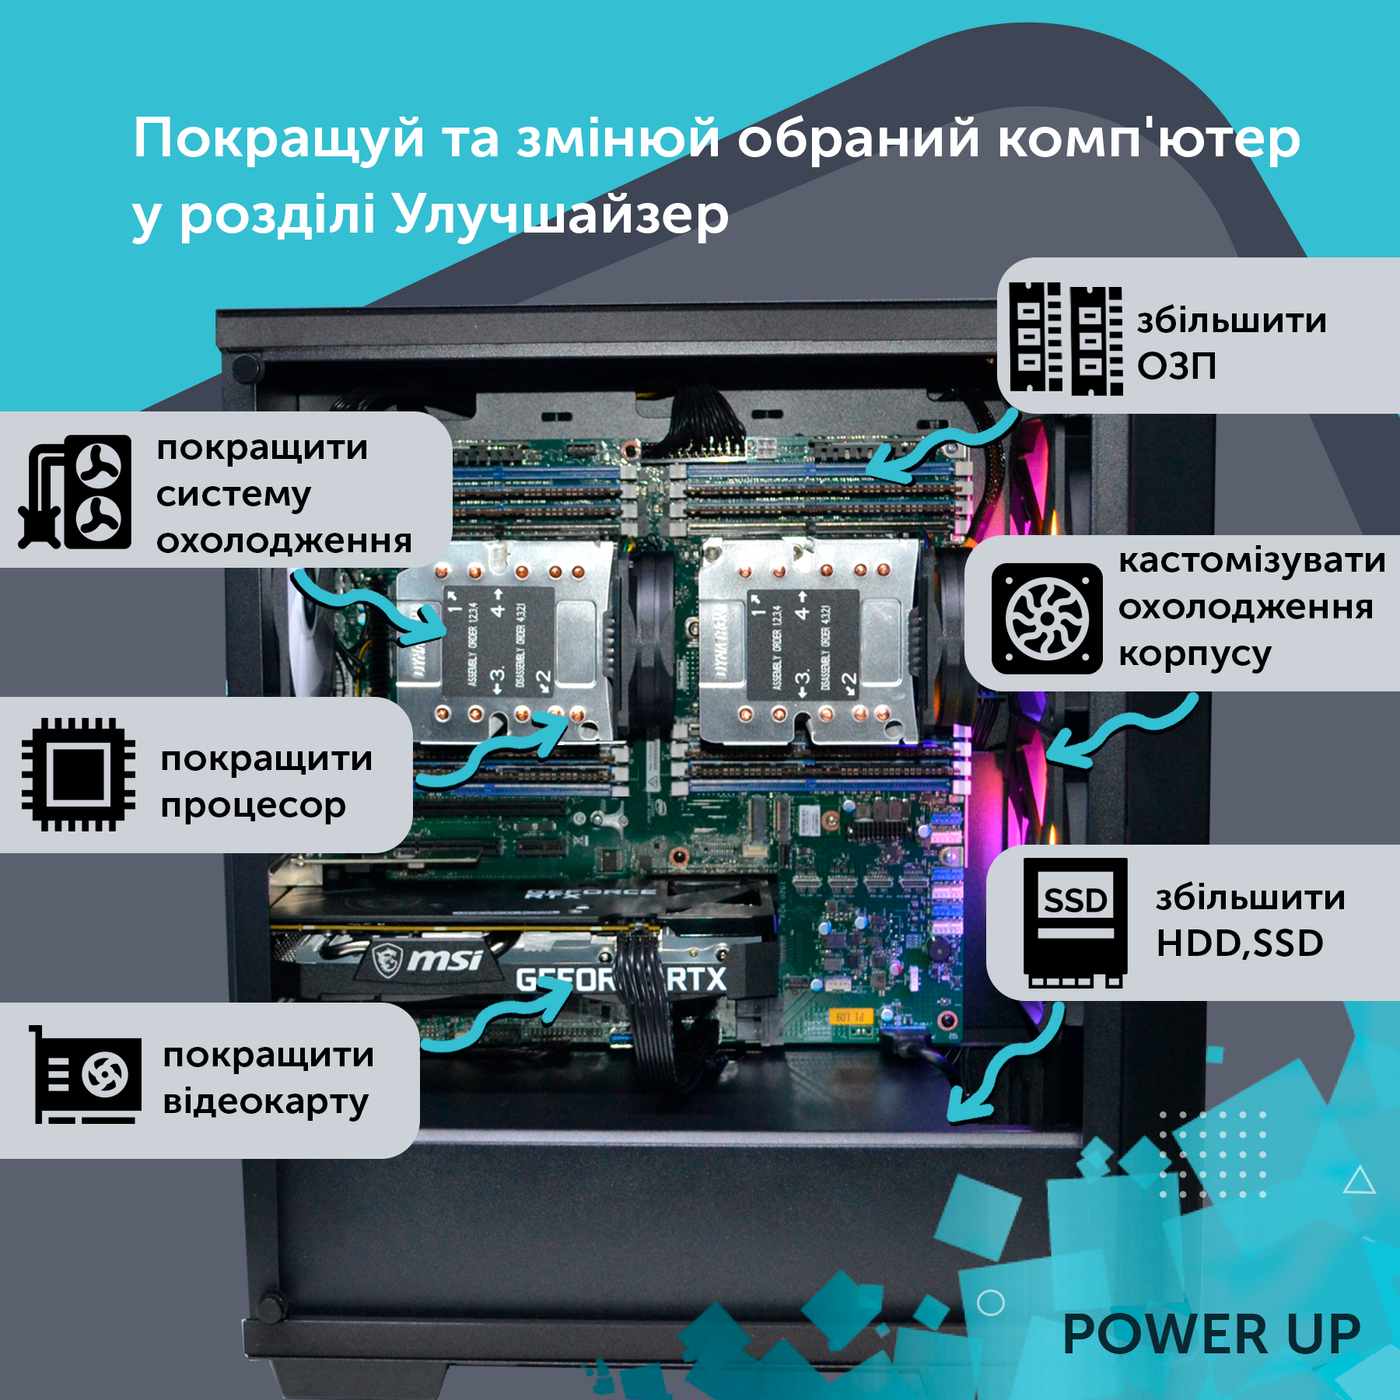 Двопроцесорна робоча станція PowerUp #429 Xeon E5 2690 v4 x2/128 GB/SSD 1TB/NVIDIA Quadro RTX A4000 16GB